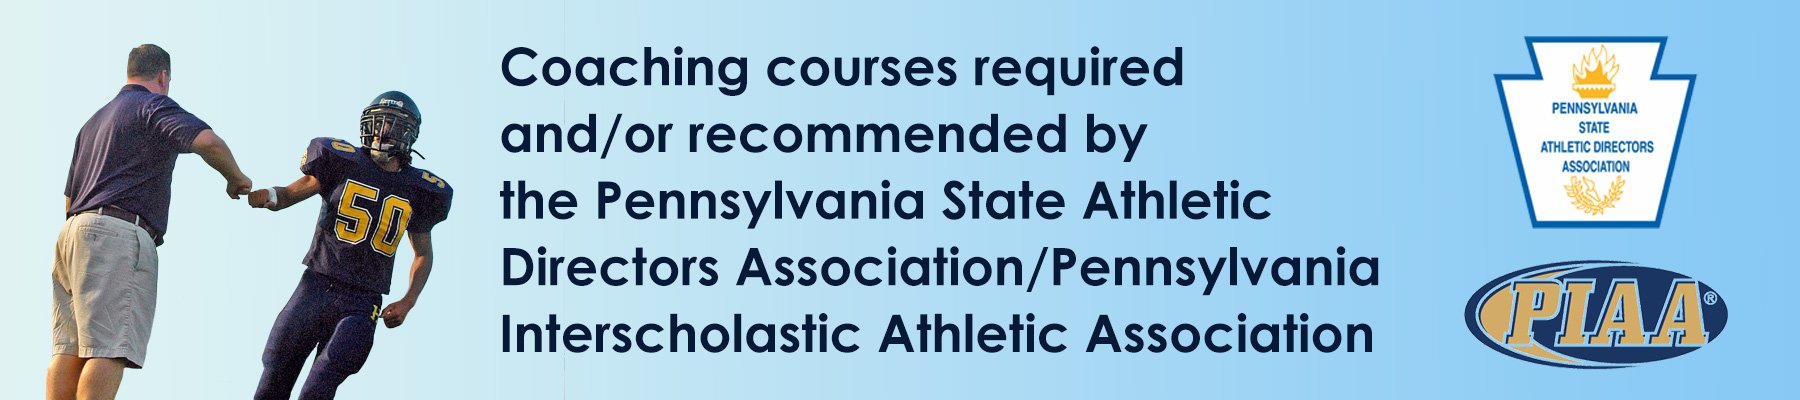 Pennsylvania Interscholastic Athletic Association/Pennsylvania State Athletic Directors Association